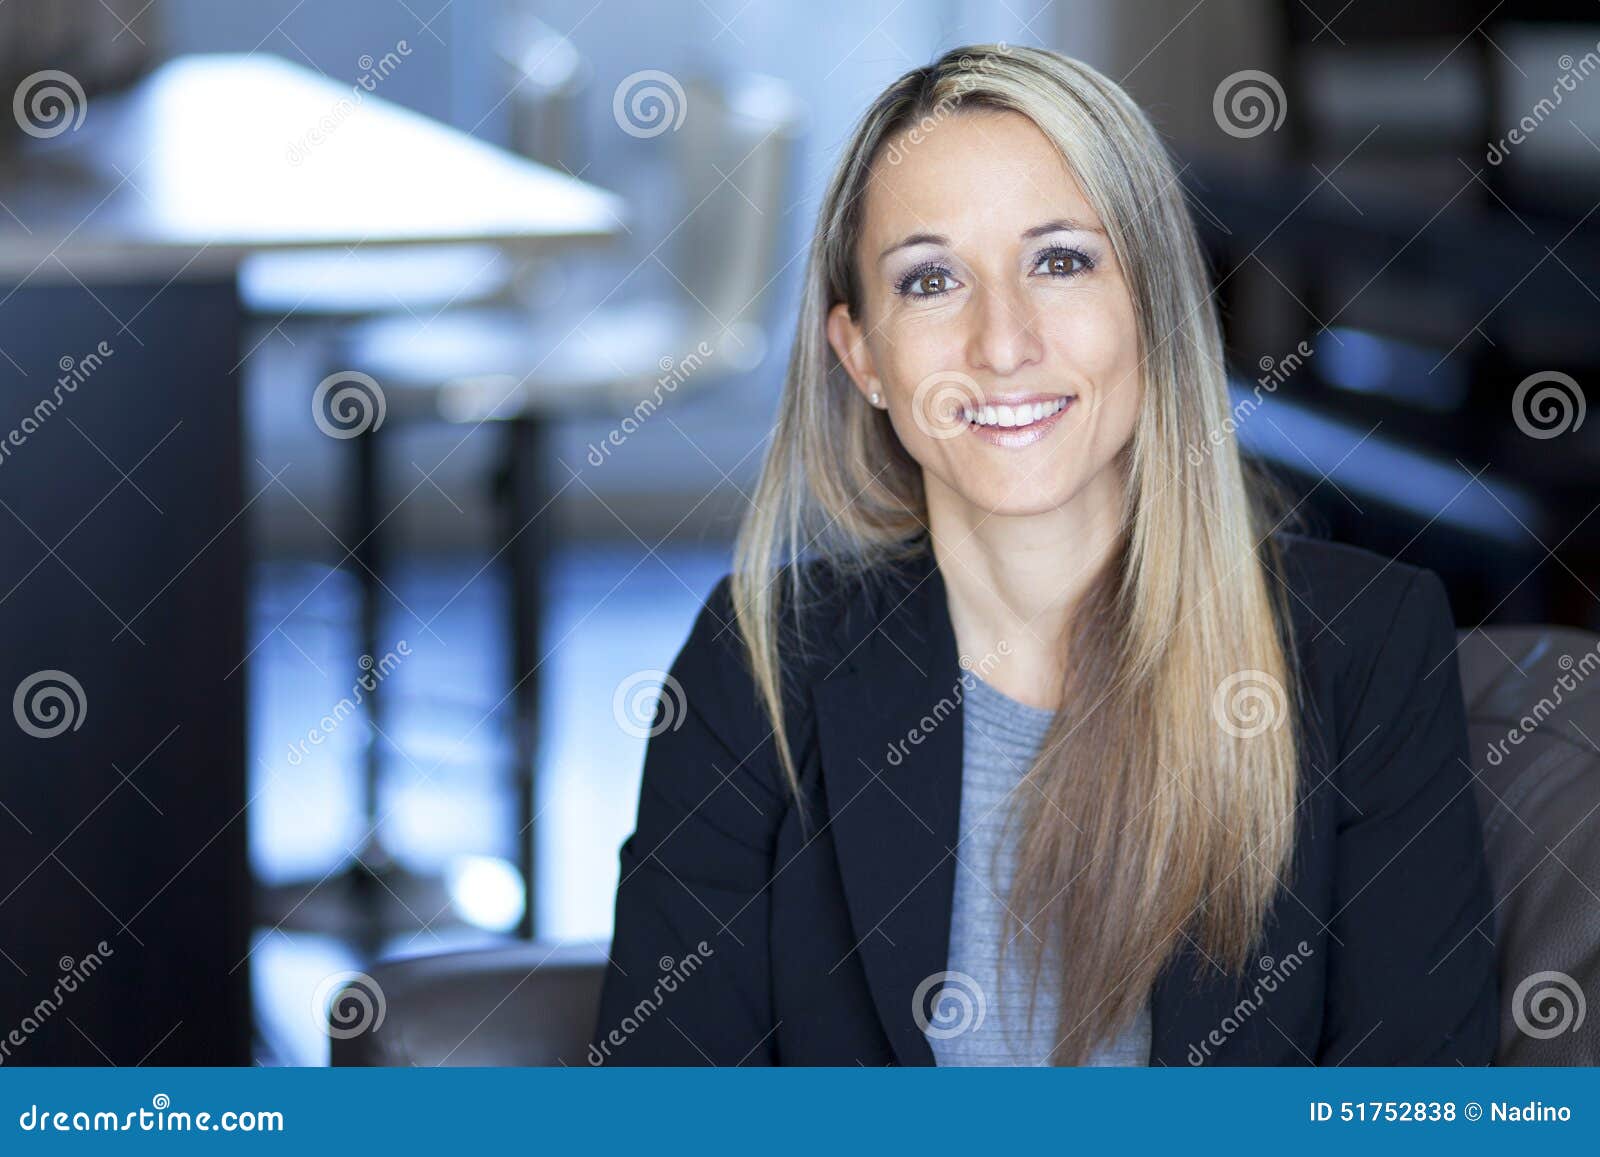 blond confident businesswoman smiling